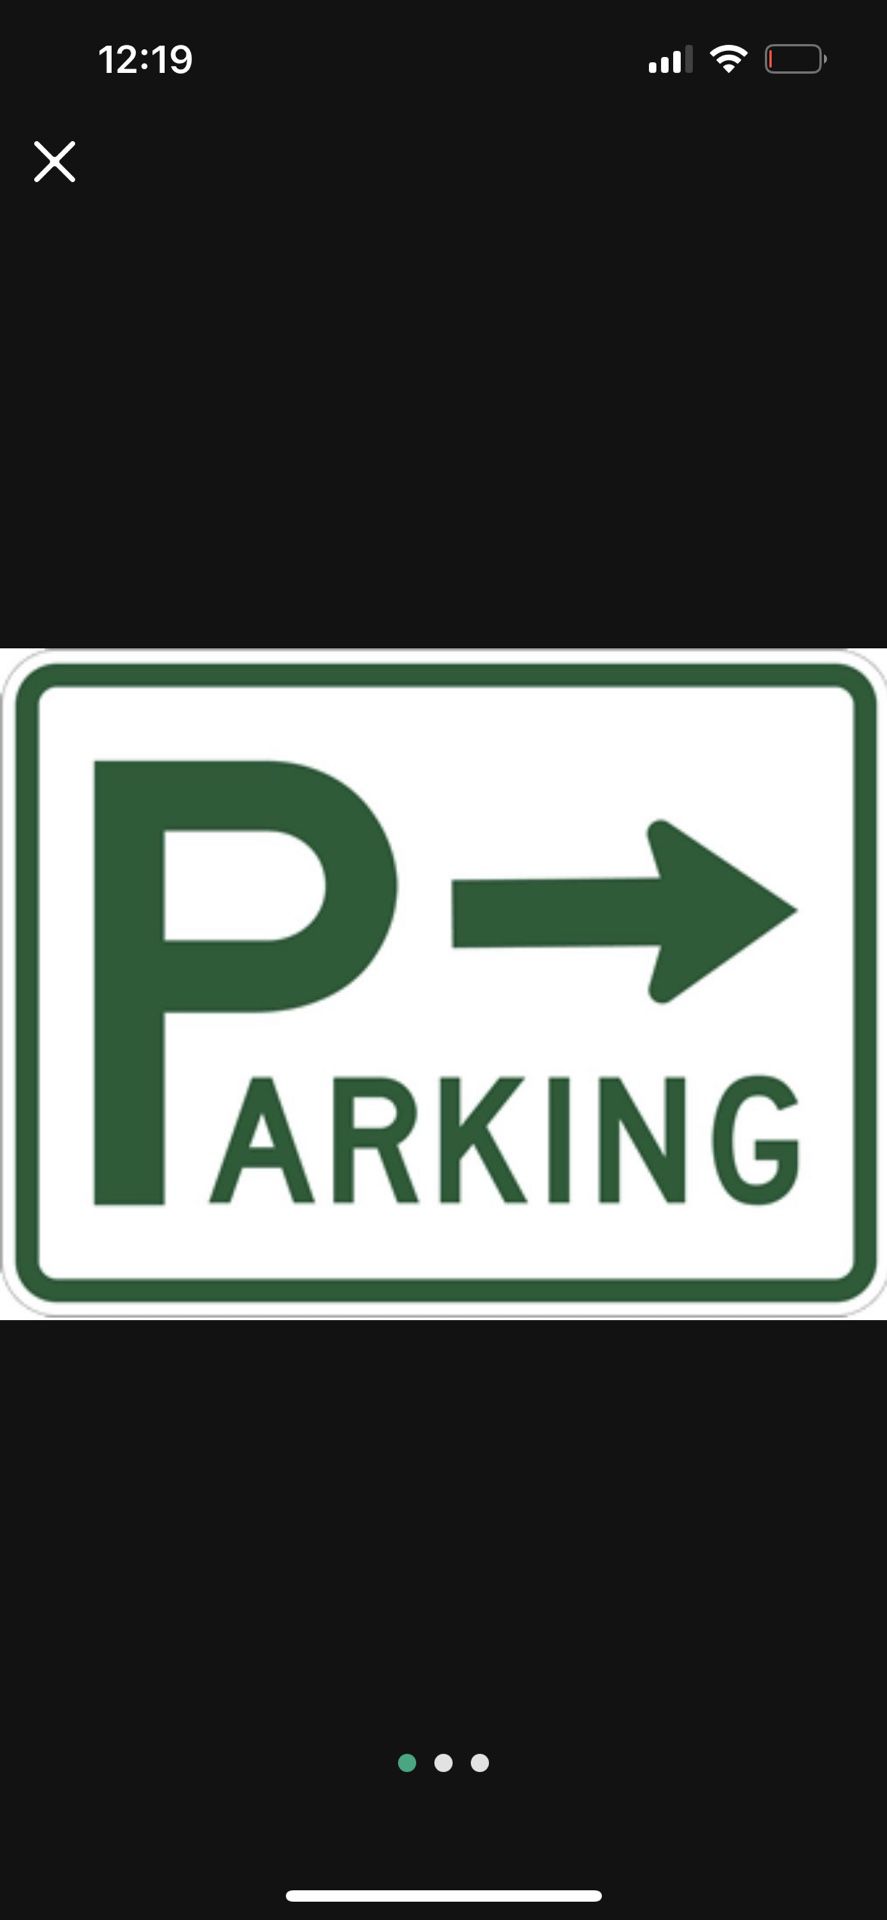 Pearl Jam Forum Parking